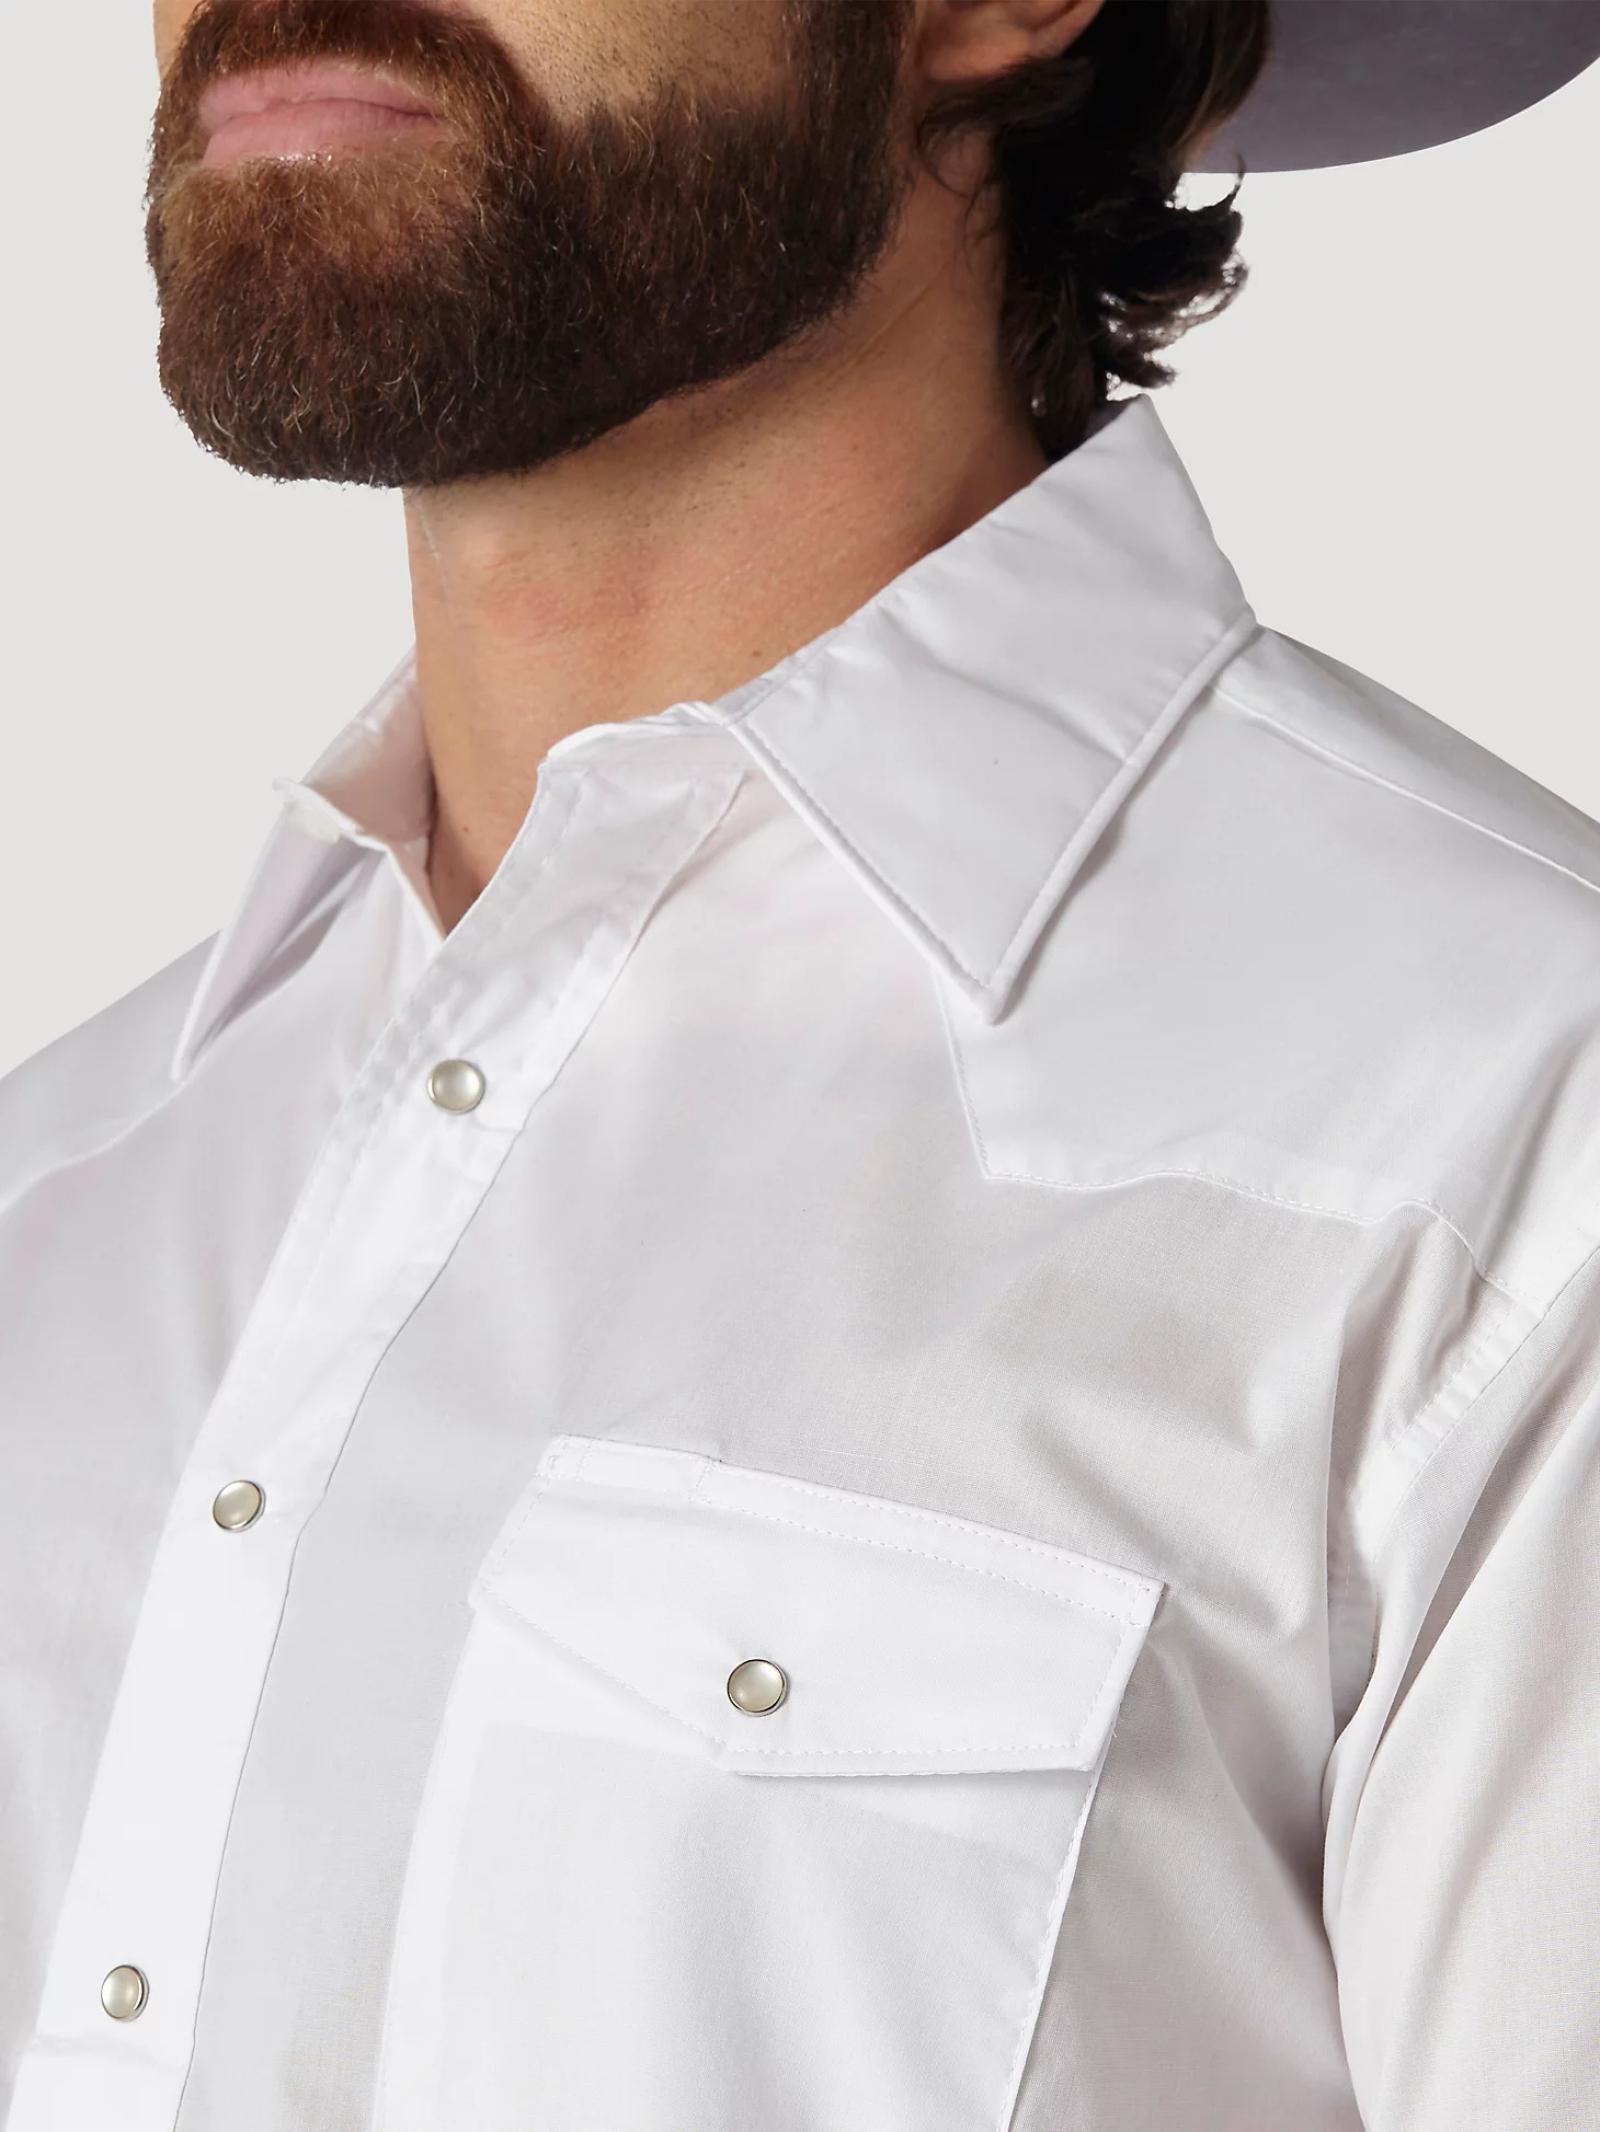 Wrangler Men's Western Snap Long Sleeve Shirt